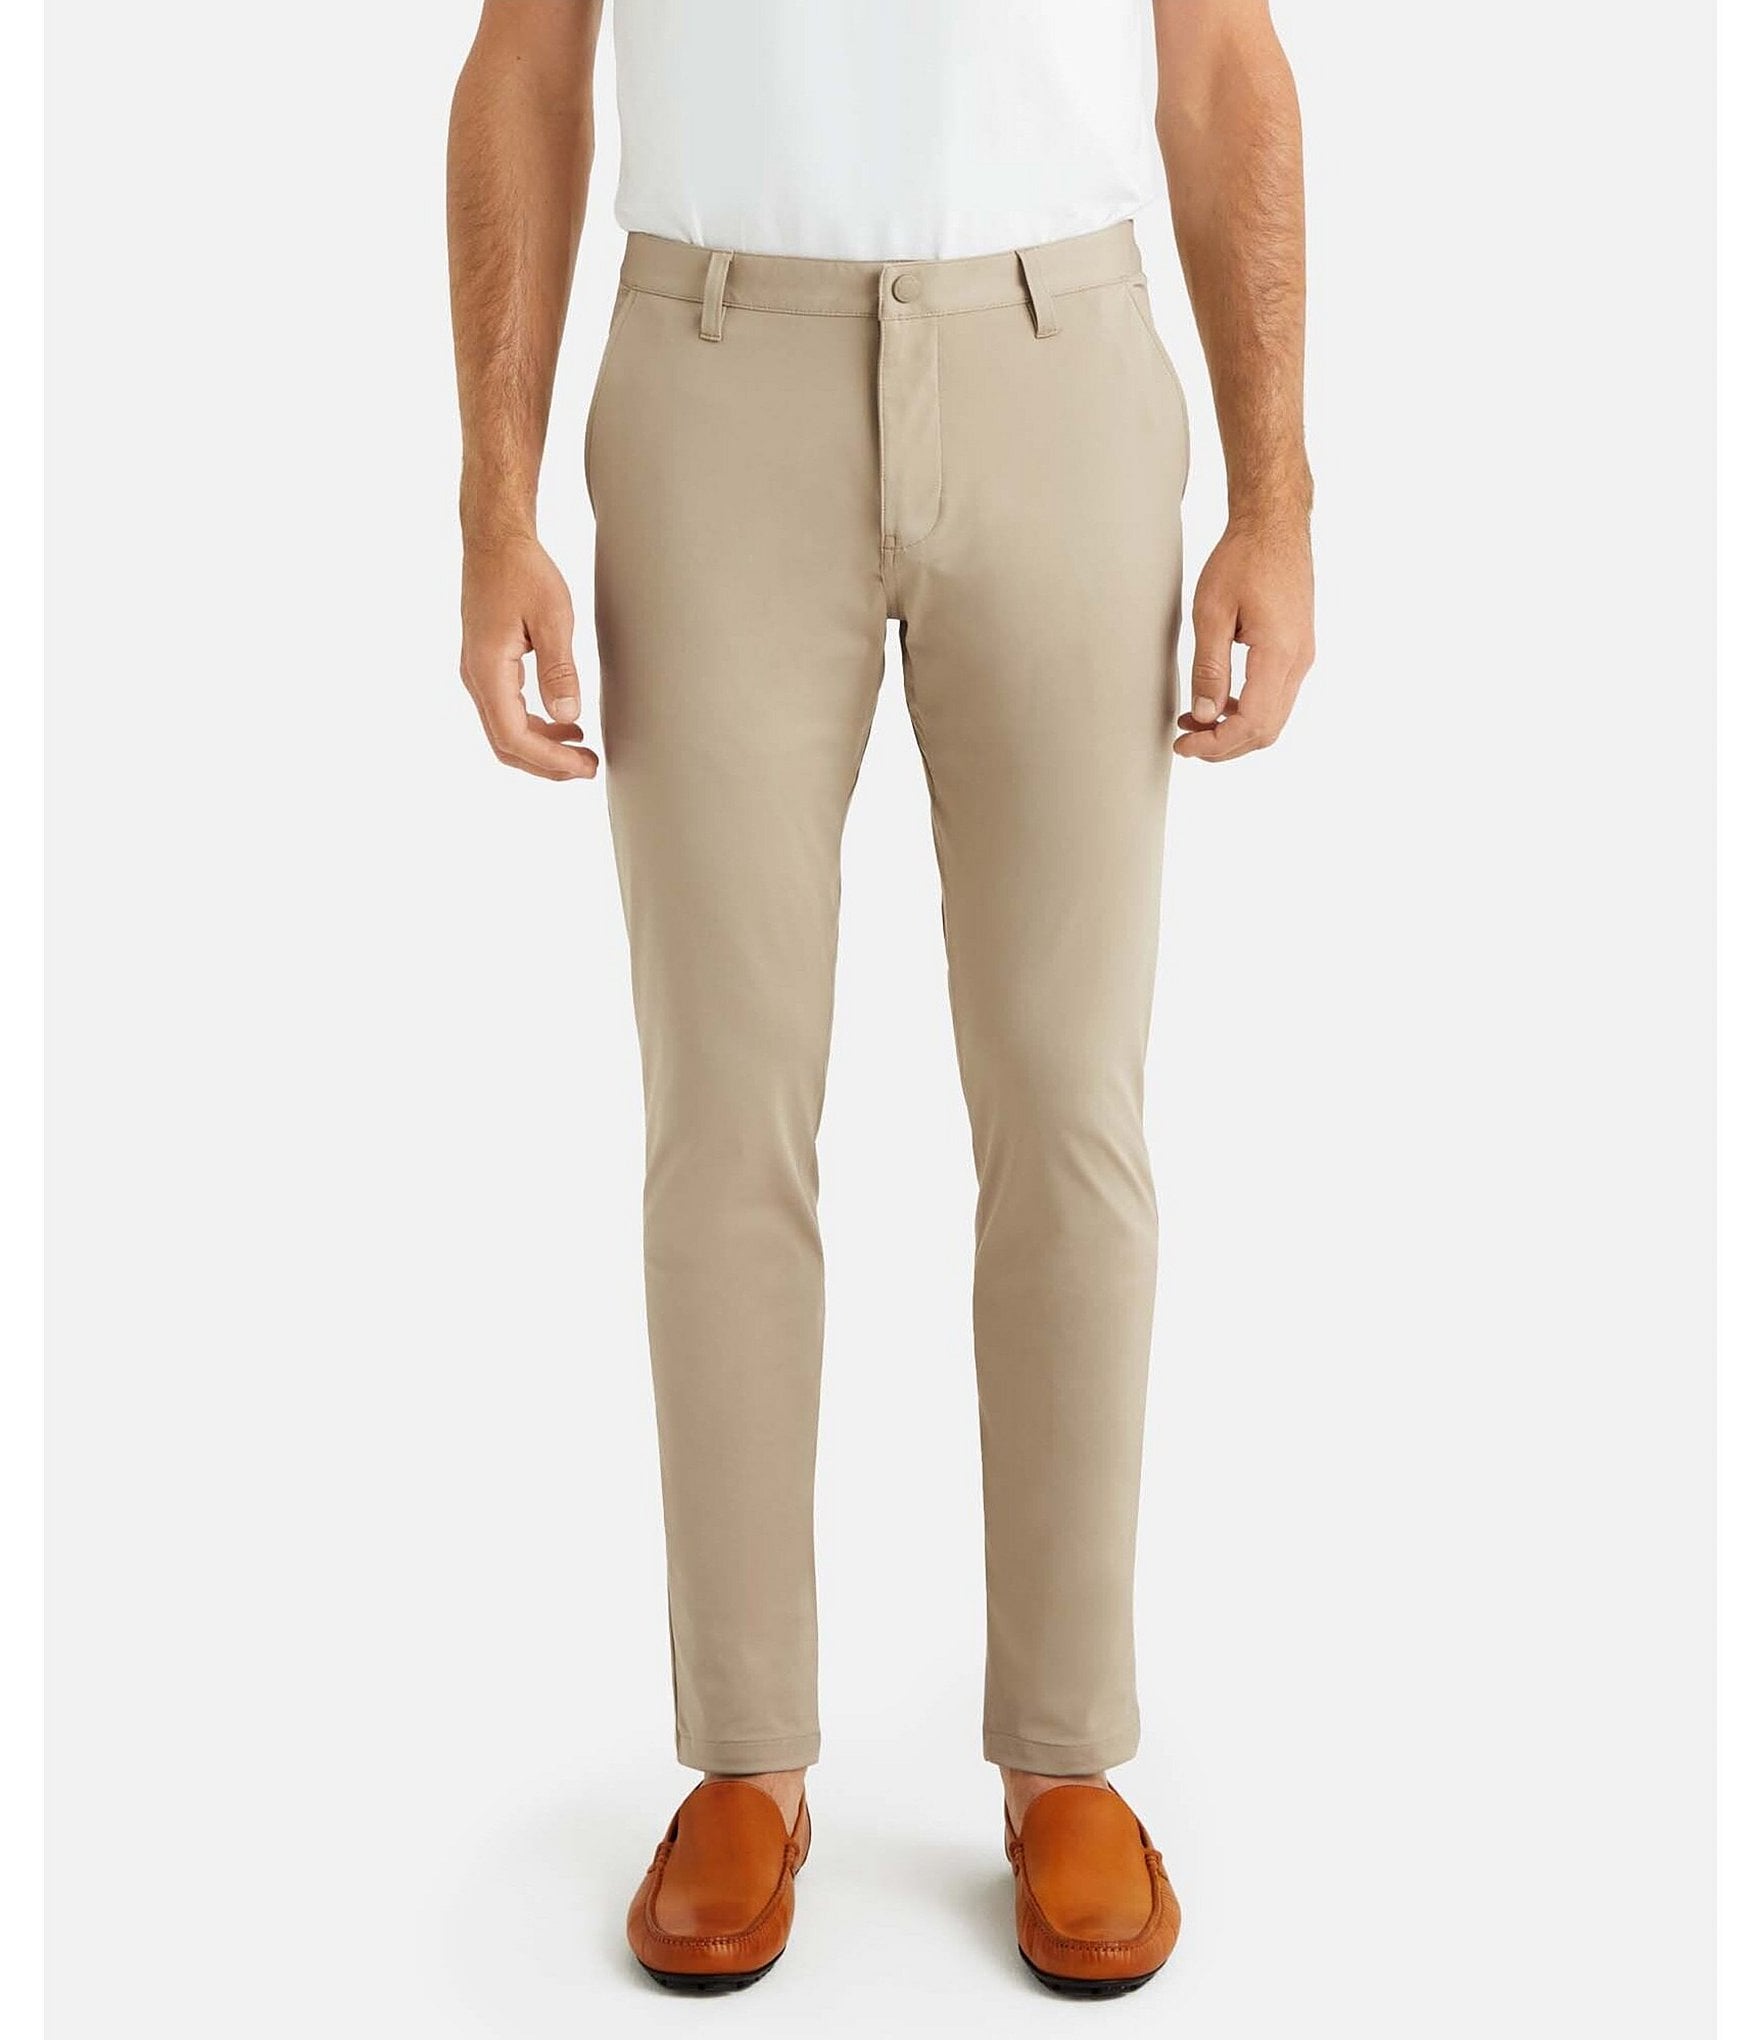 RHONE Slim Fit Flat Front Commuter Stretch Pants | Dillard's